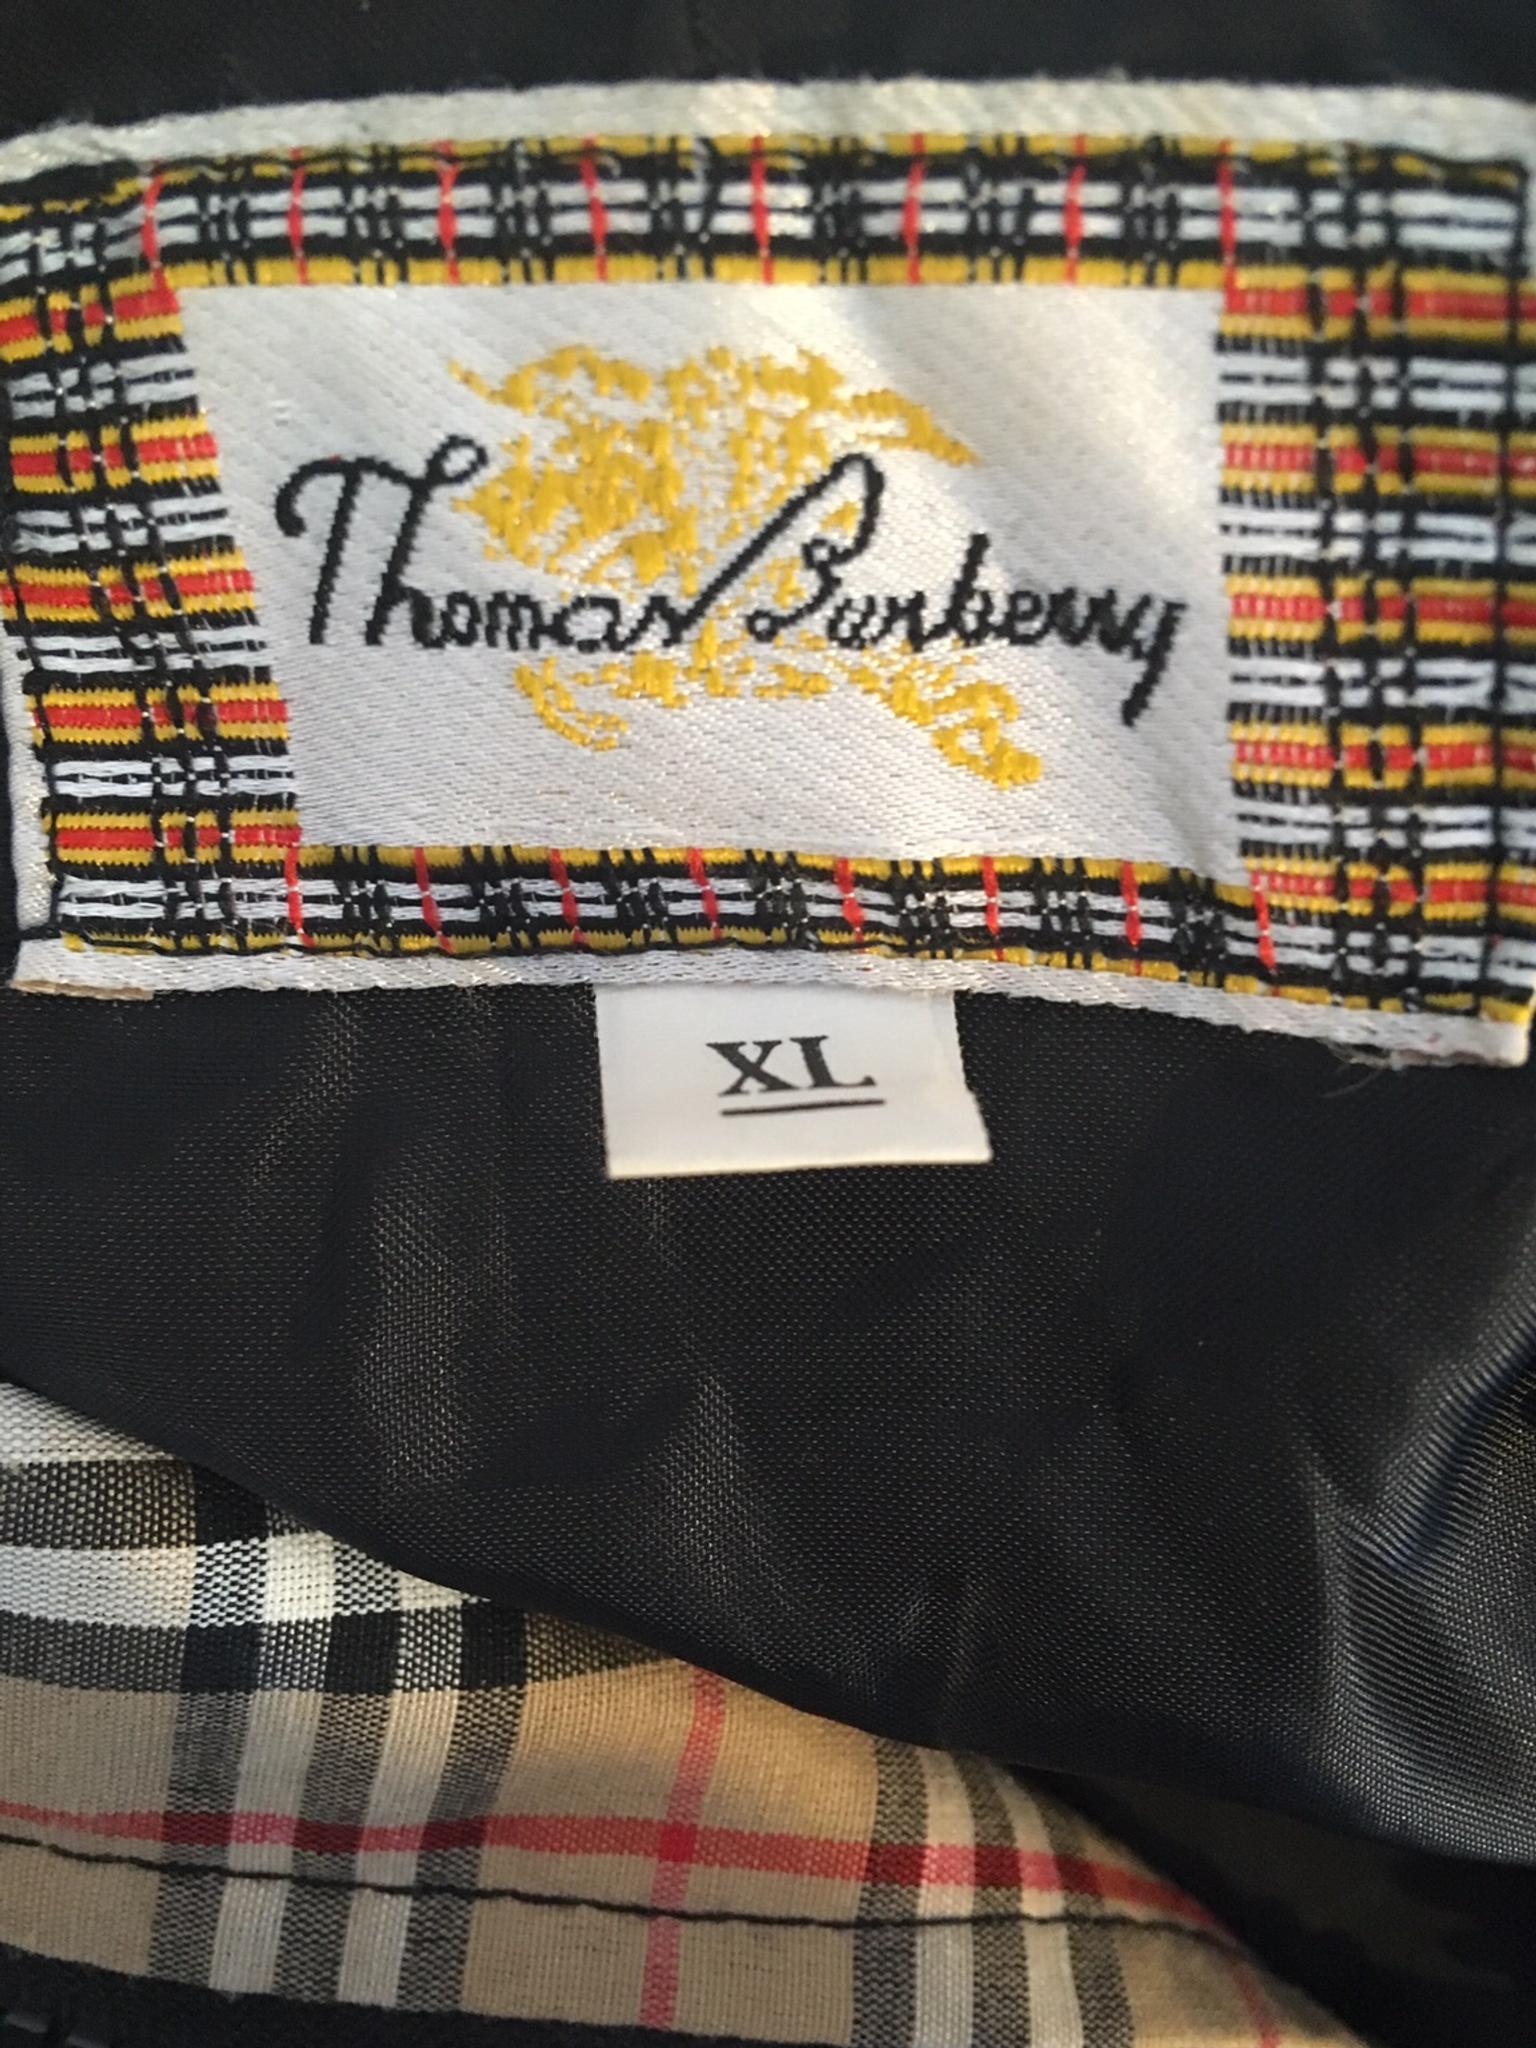 thomas burberry label